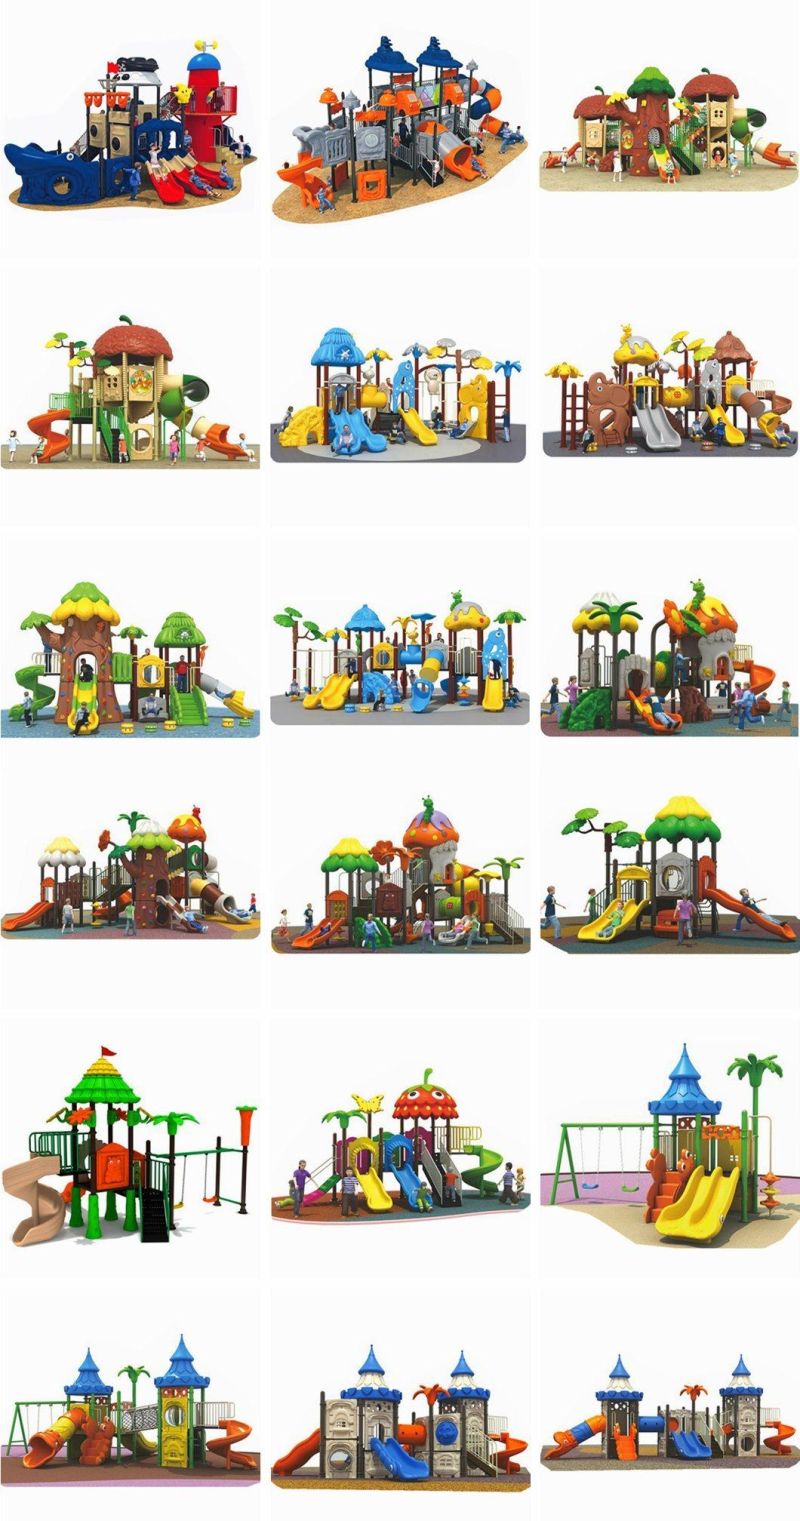 Hot Sale Outdoor Playground Equipment Kids Amusement Park Large Slide